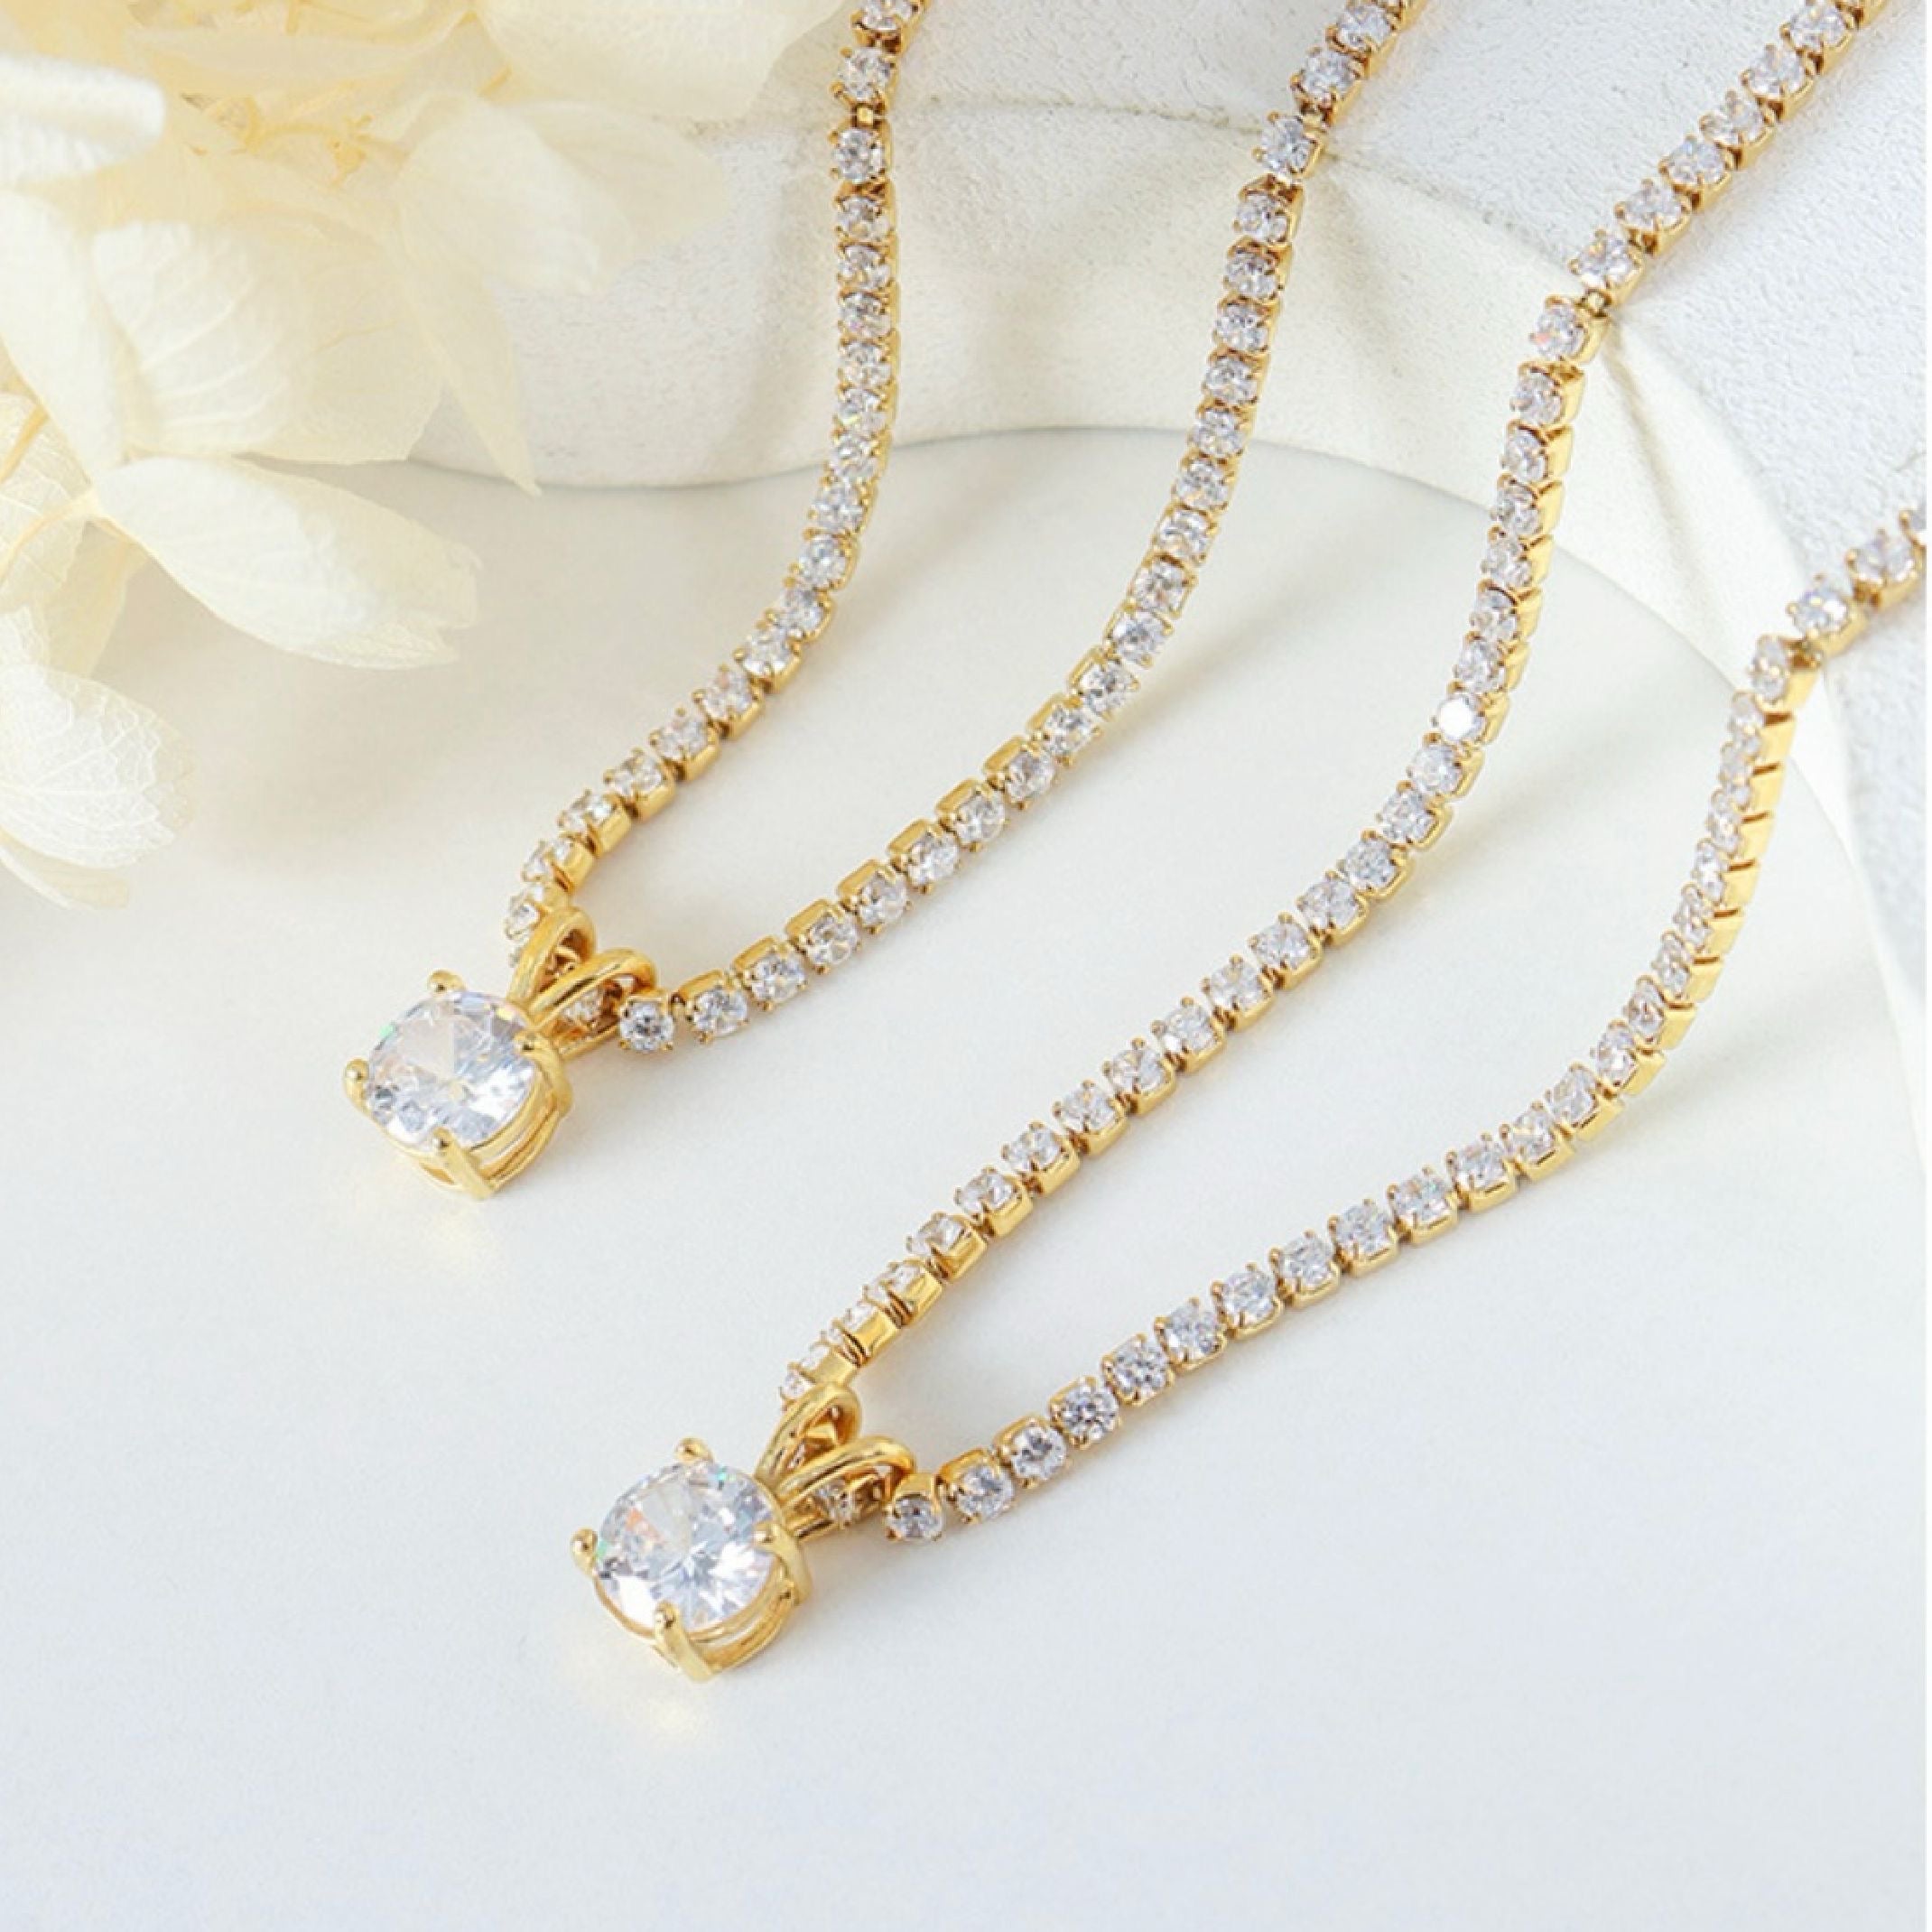 Diamond pendant tennis necklace 